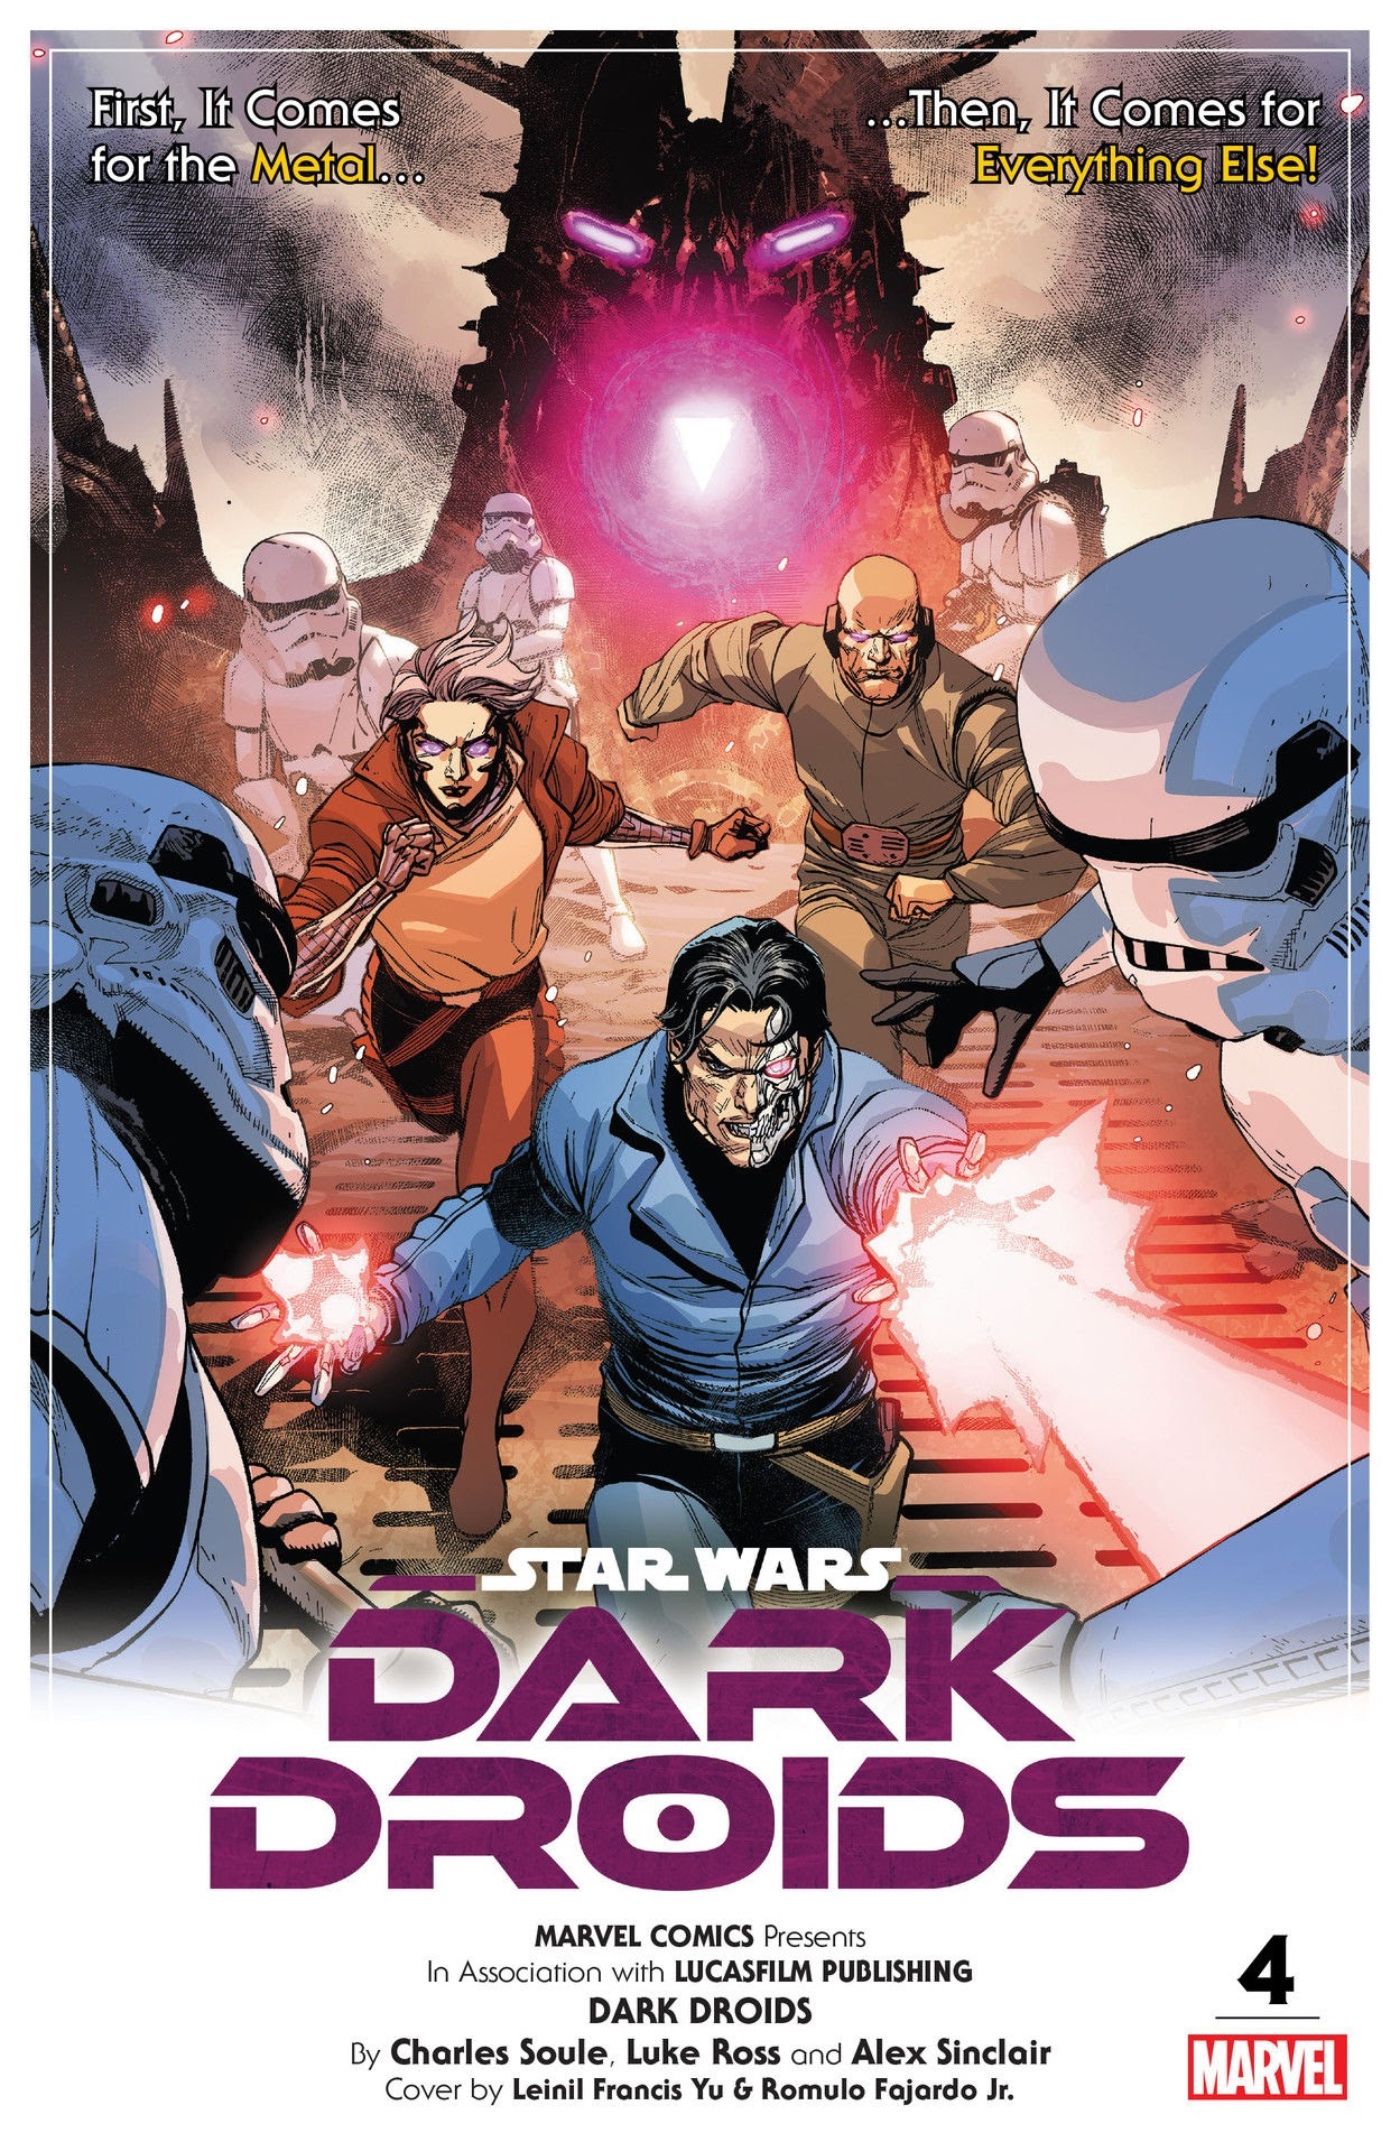 Star Wars Dark Droids #4 Cover Art